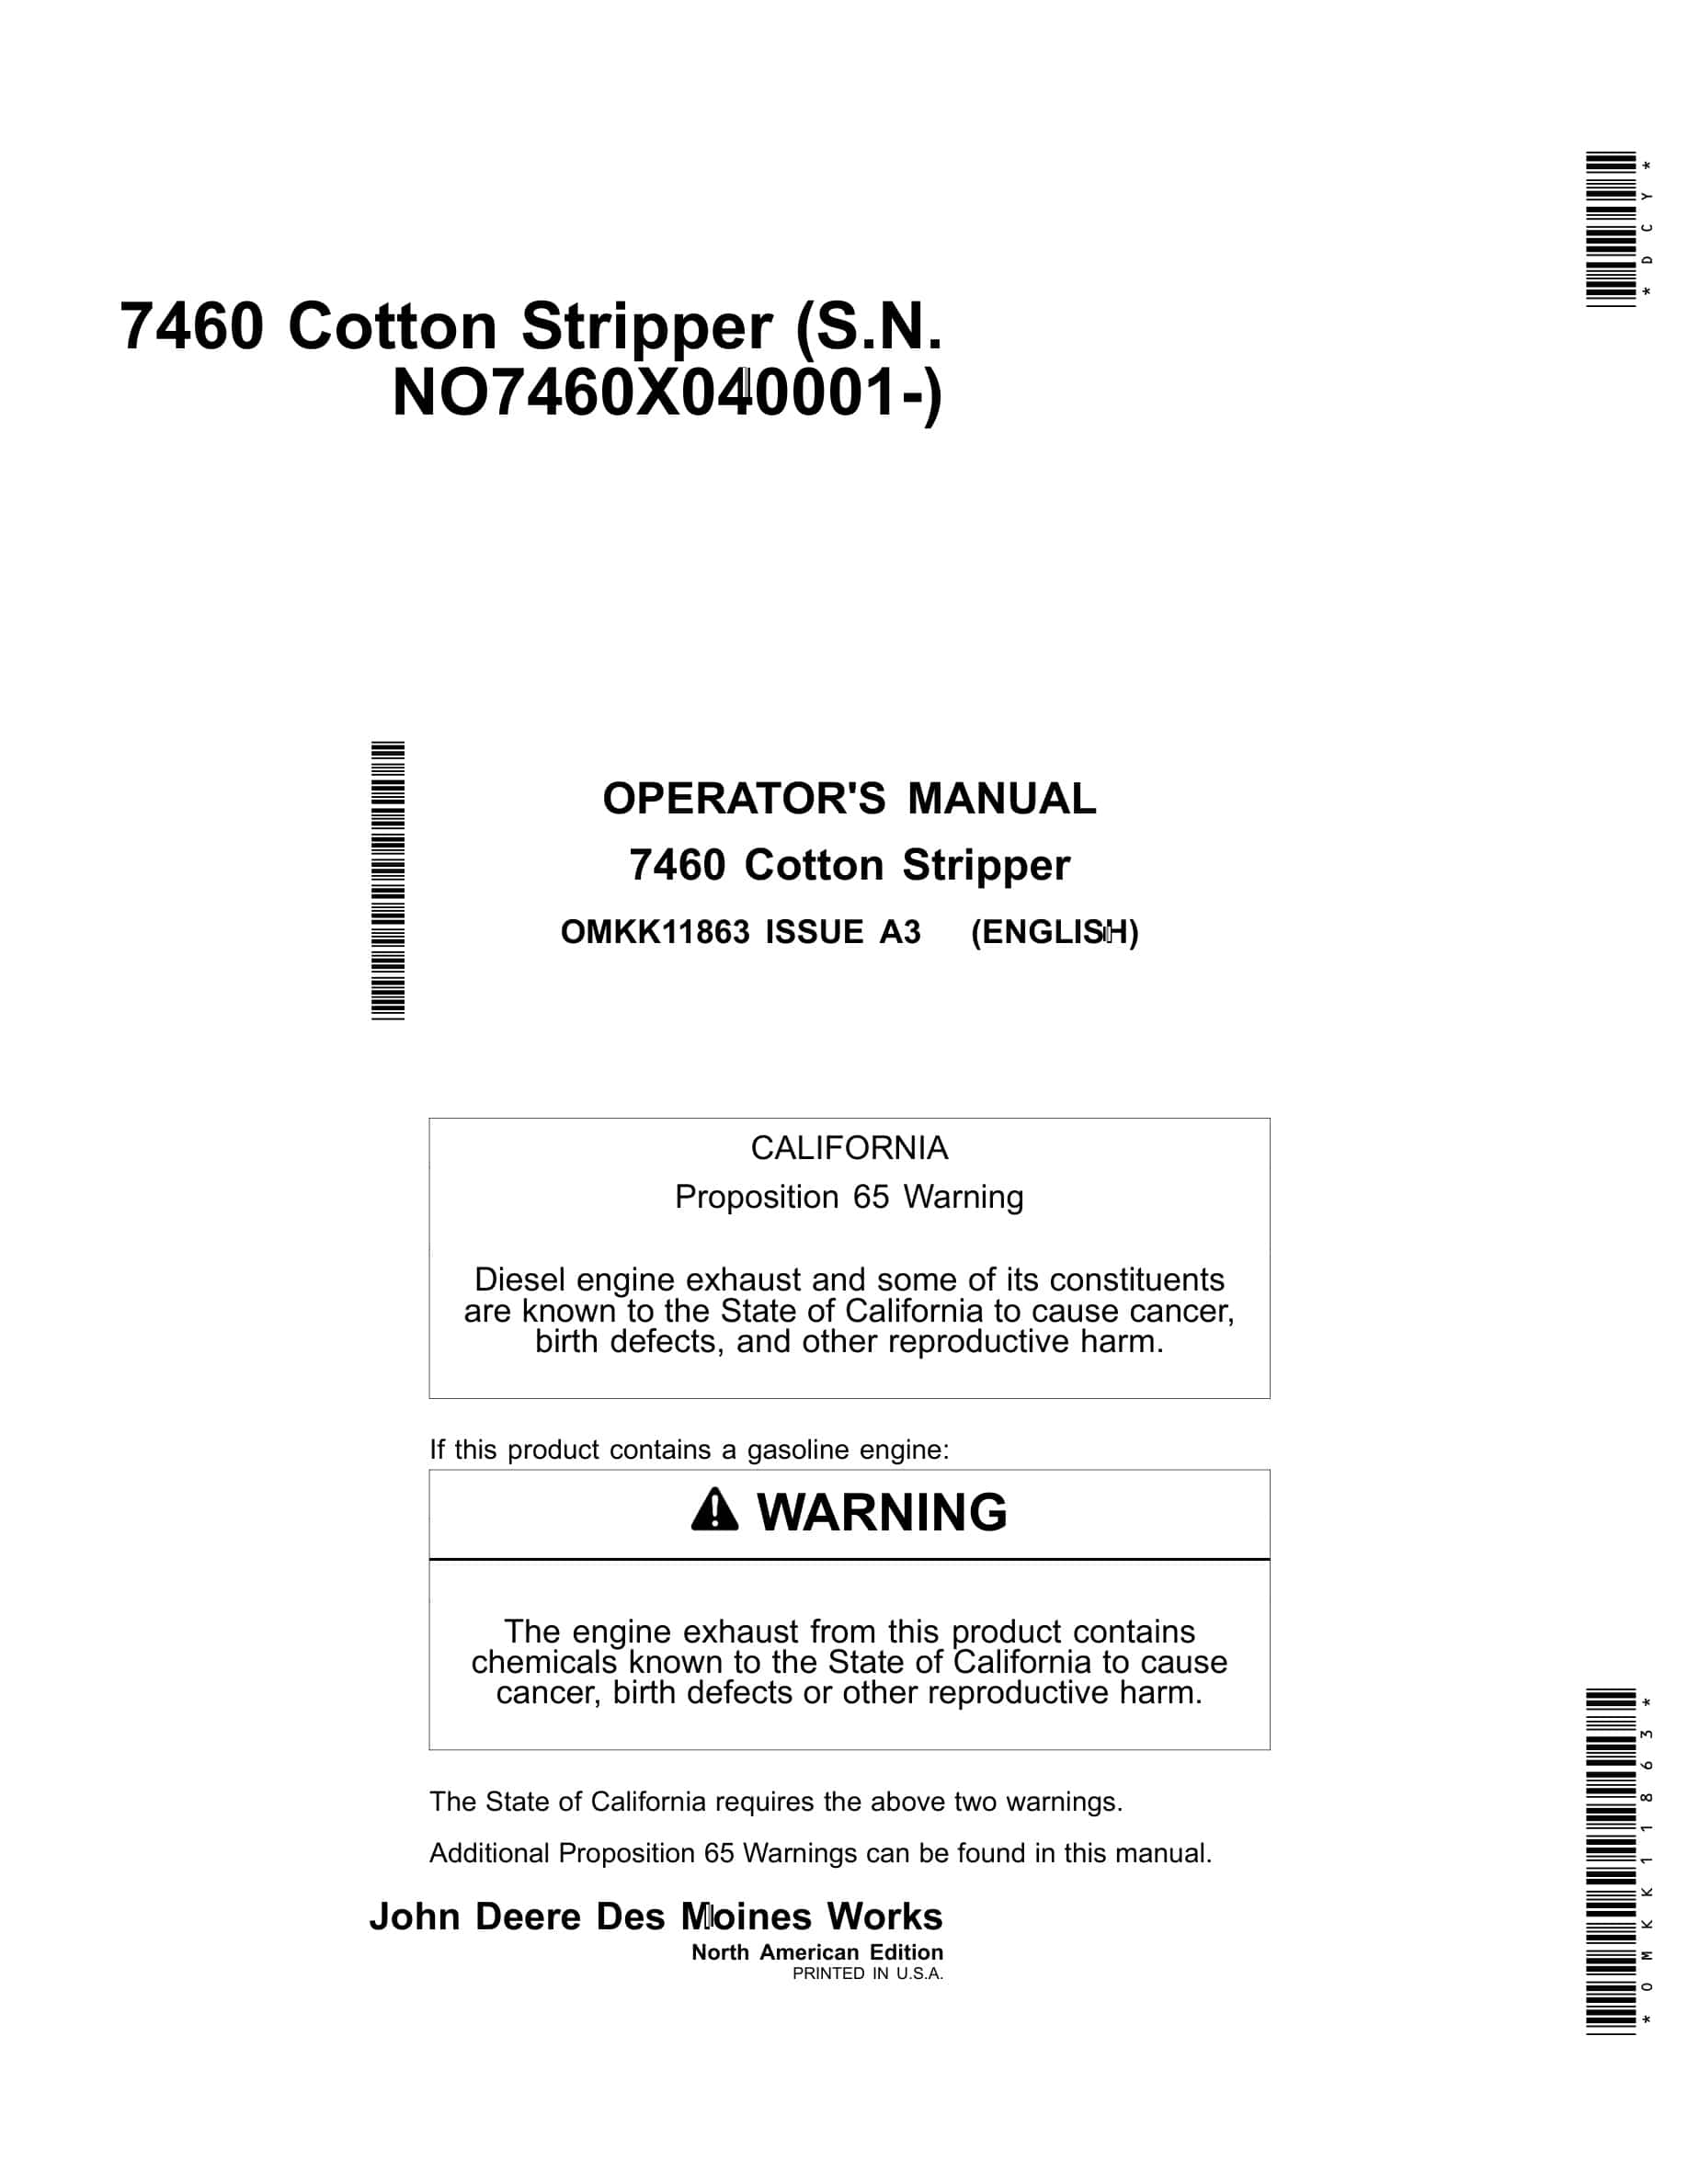 John Deere 7460 Cotton Stripper Operator Manual OMKK11863-1